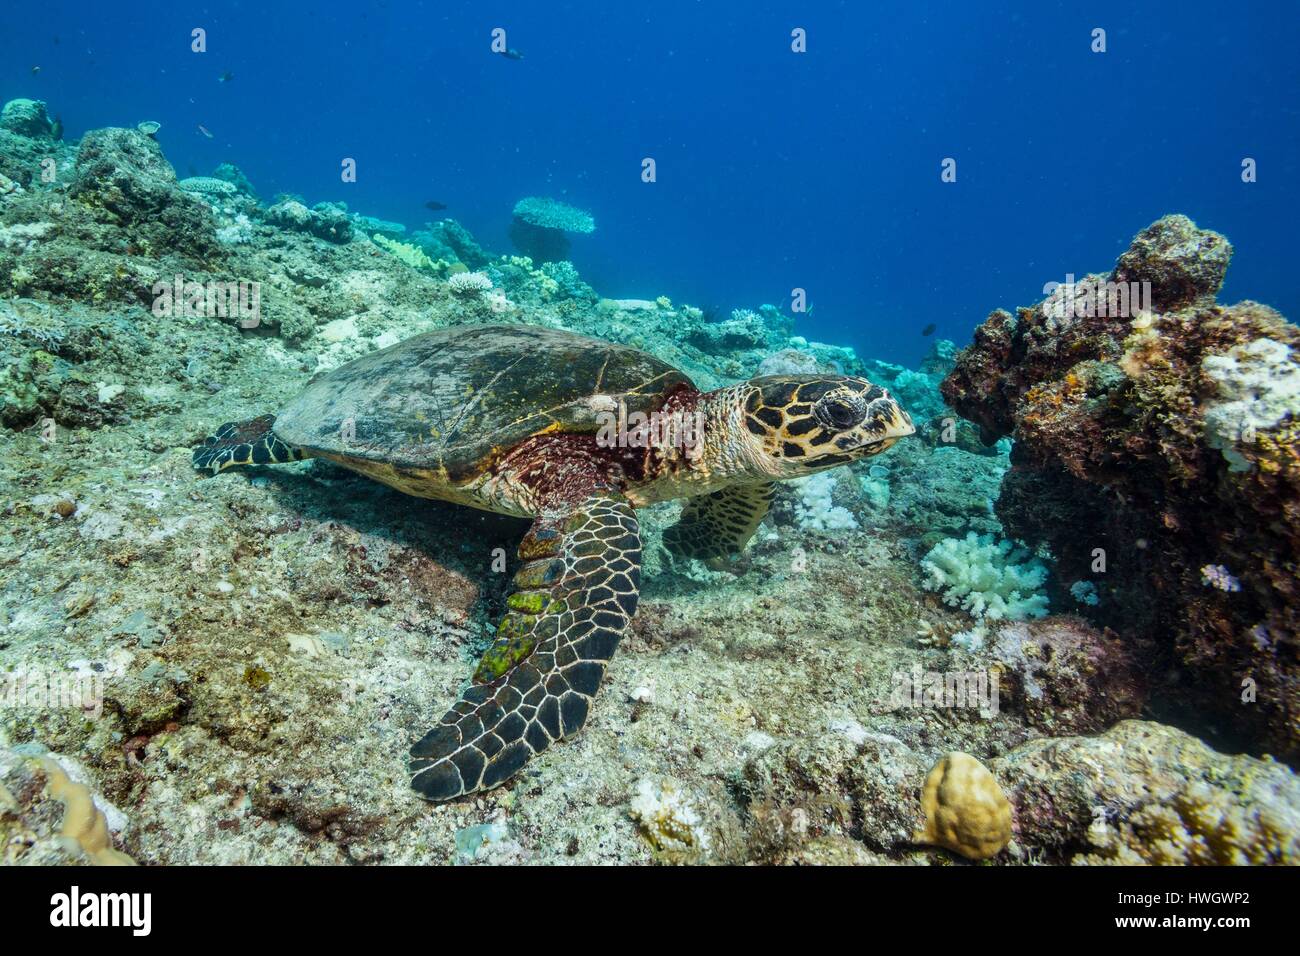 Philippines, Mindoro, Apo Reef Natural Park, a critically endangered hawksbill turtle (Eretmochelys imbricata) Stock Photo